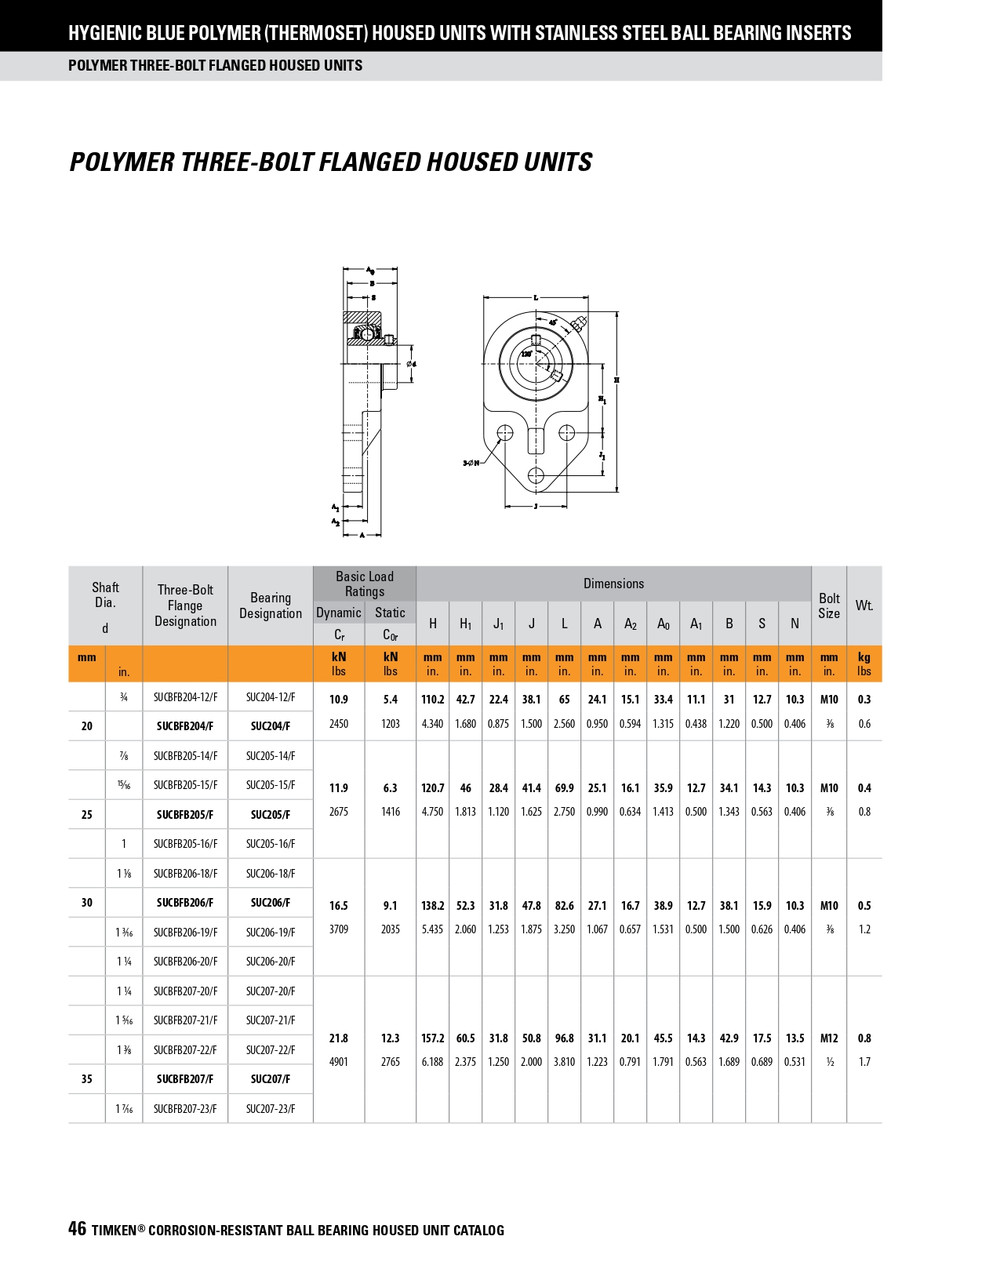 45mm Hygienic Polymer Set Screw Three-Bolt Flange Block Assembly   SUCBFB209/F